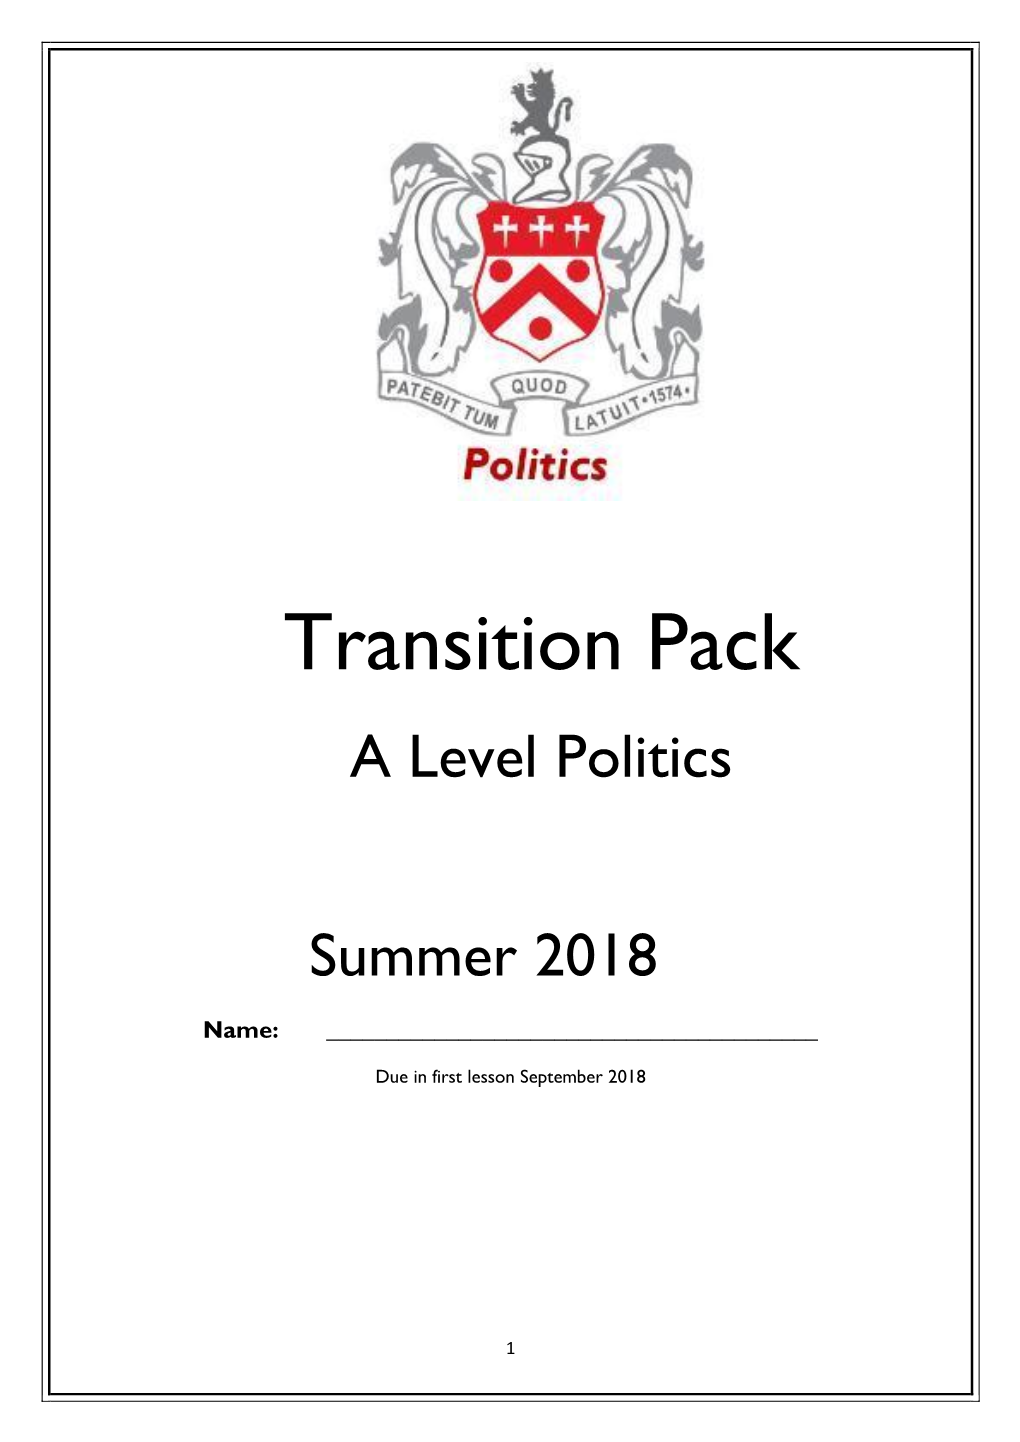 Transition Pack a Level Politics